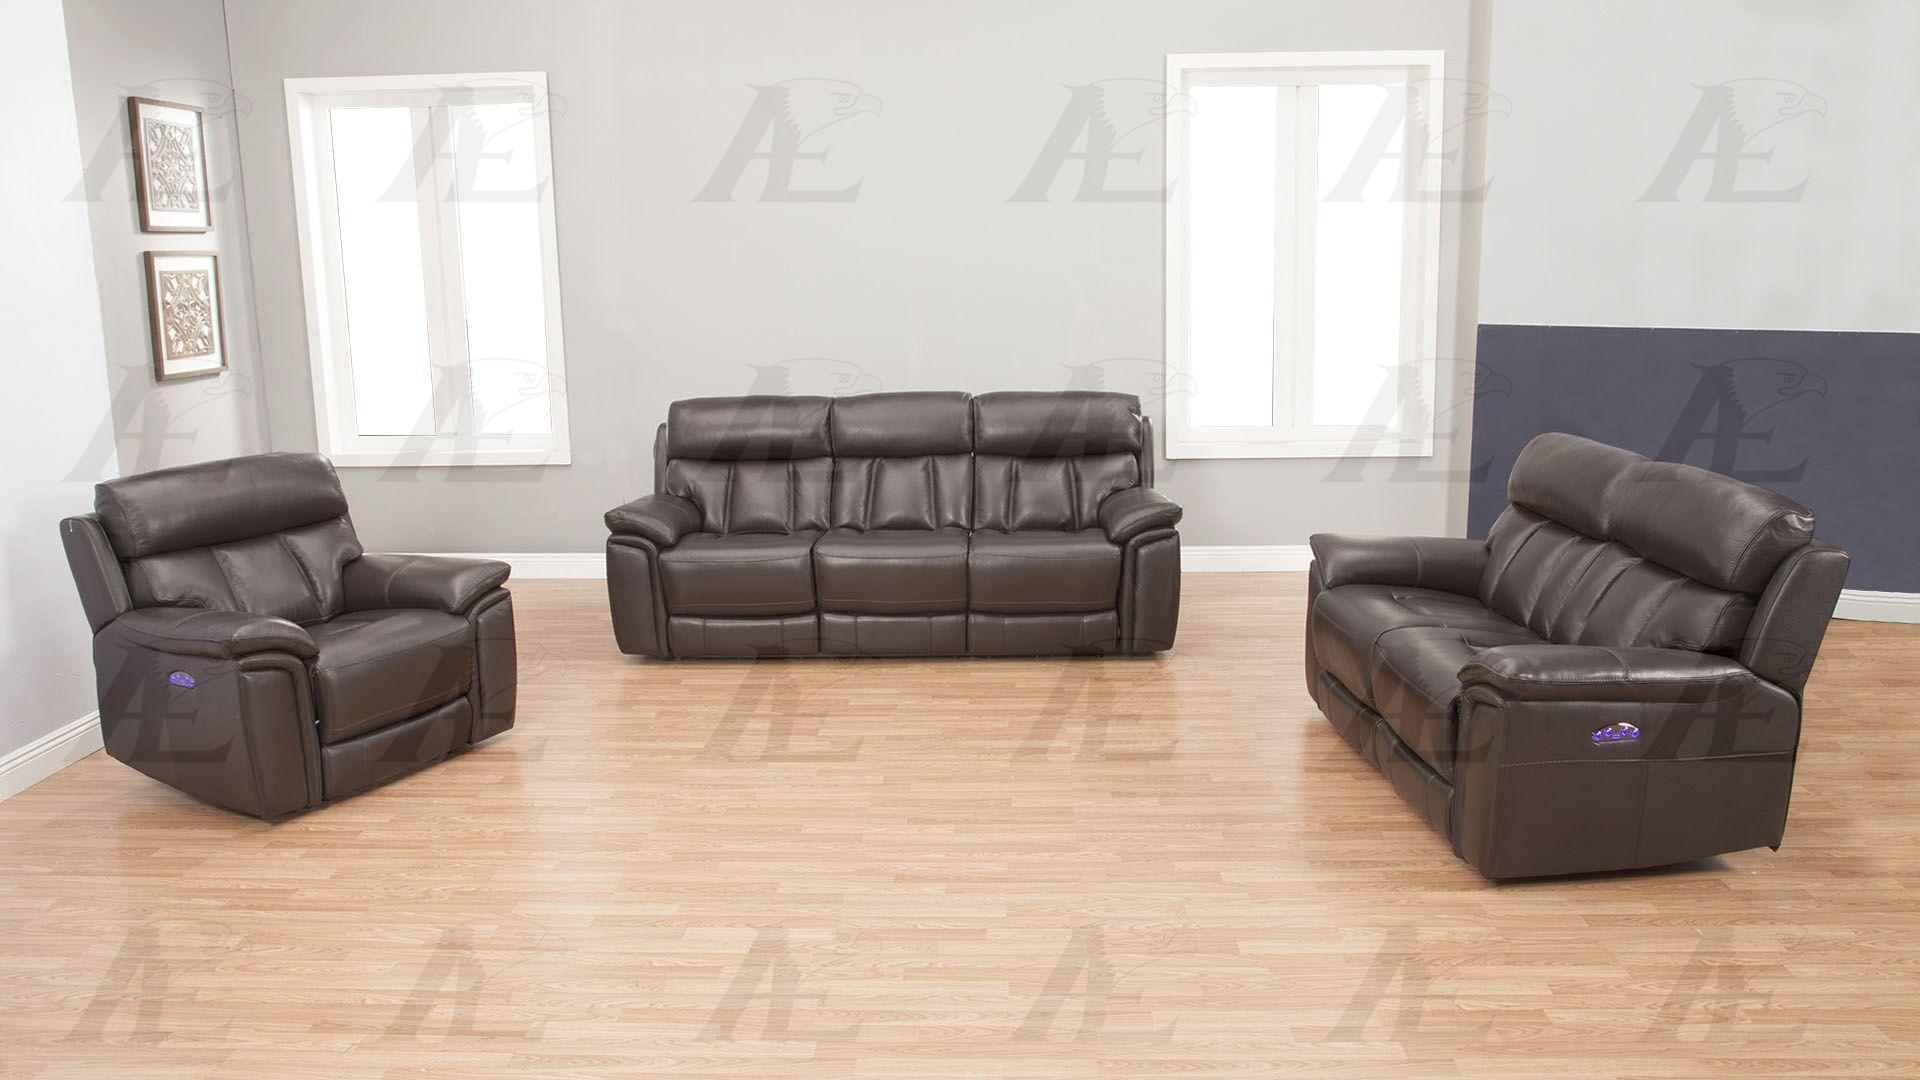 

                    
American Eagle Furniture EK-H512-DB-LS Recliner Loveseat Dark Brown Top grain leather Purchase 
